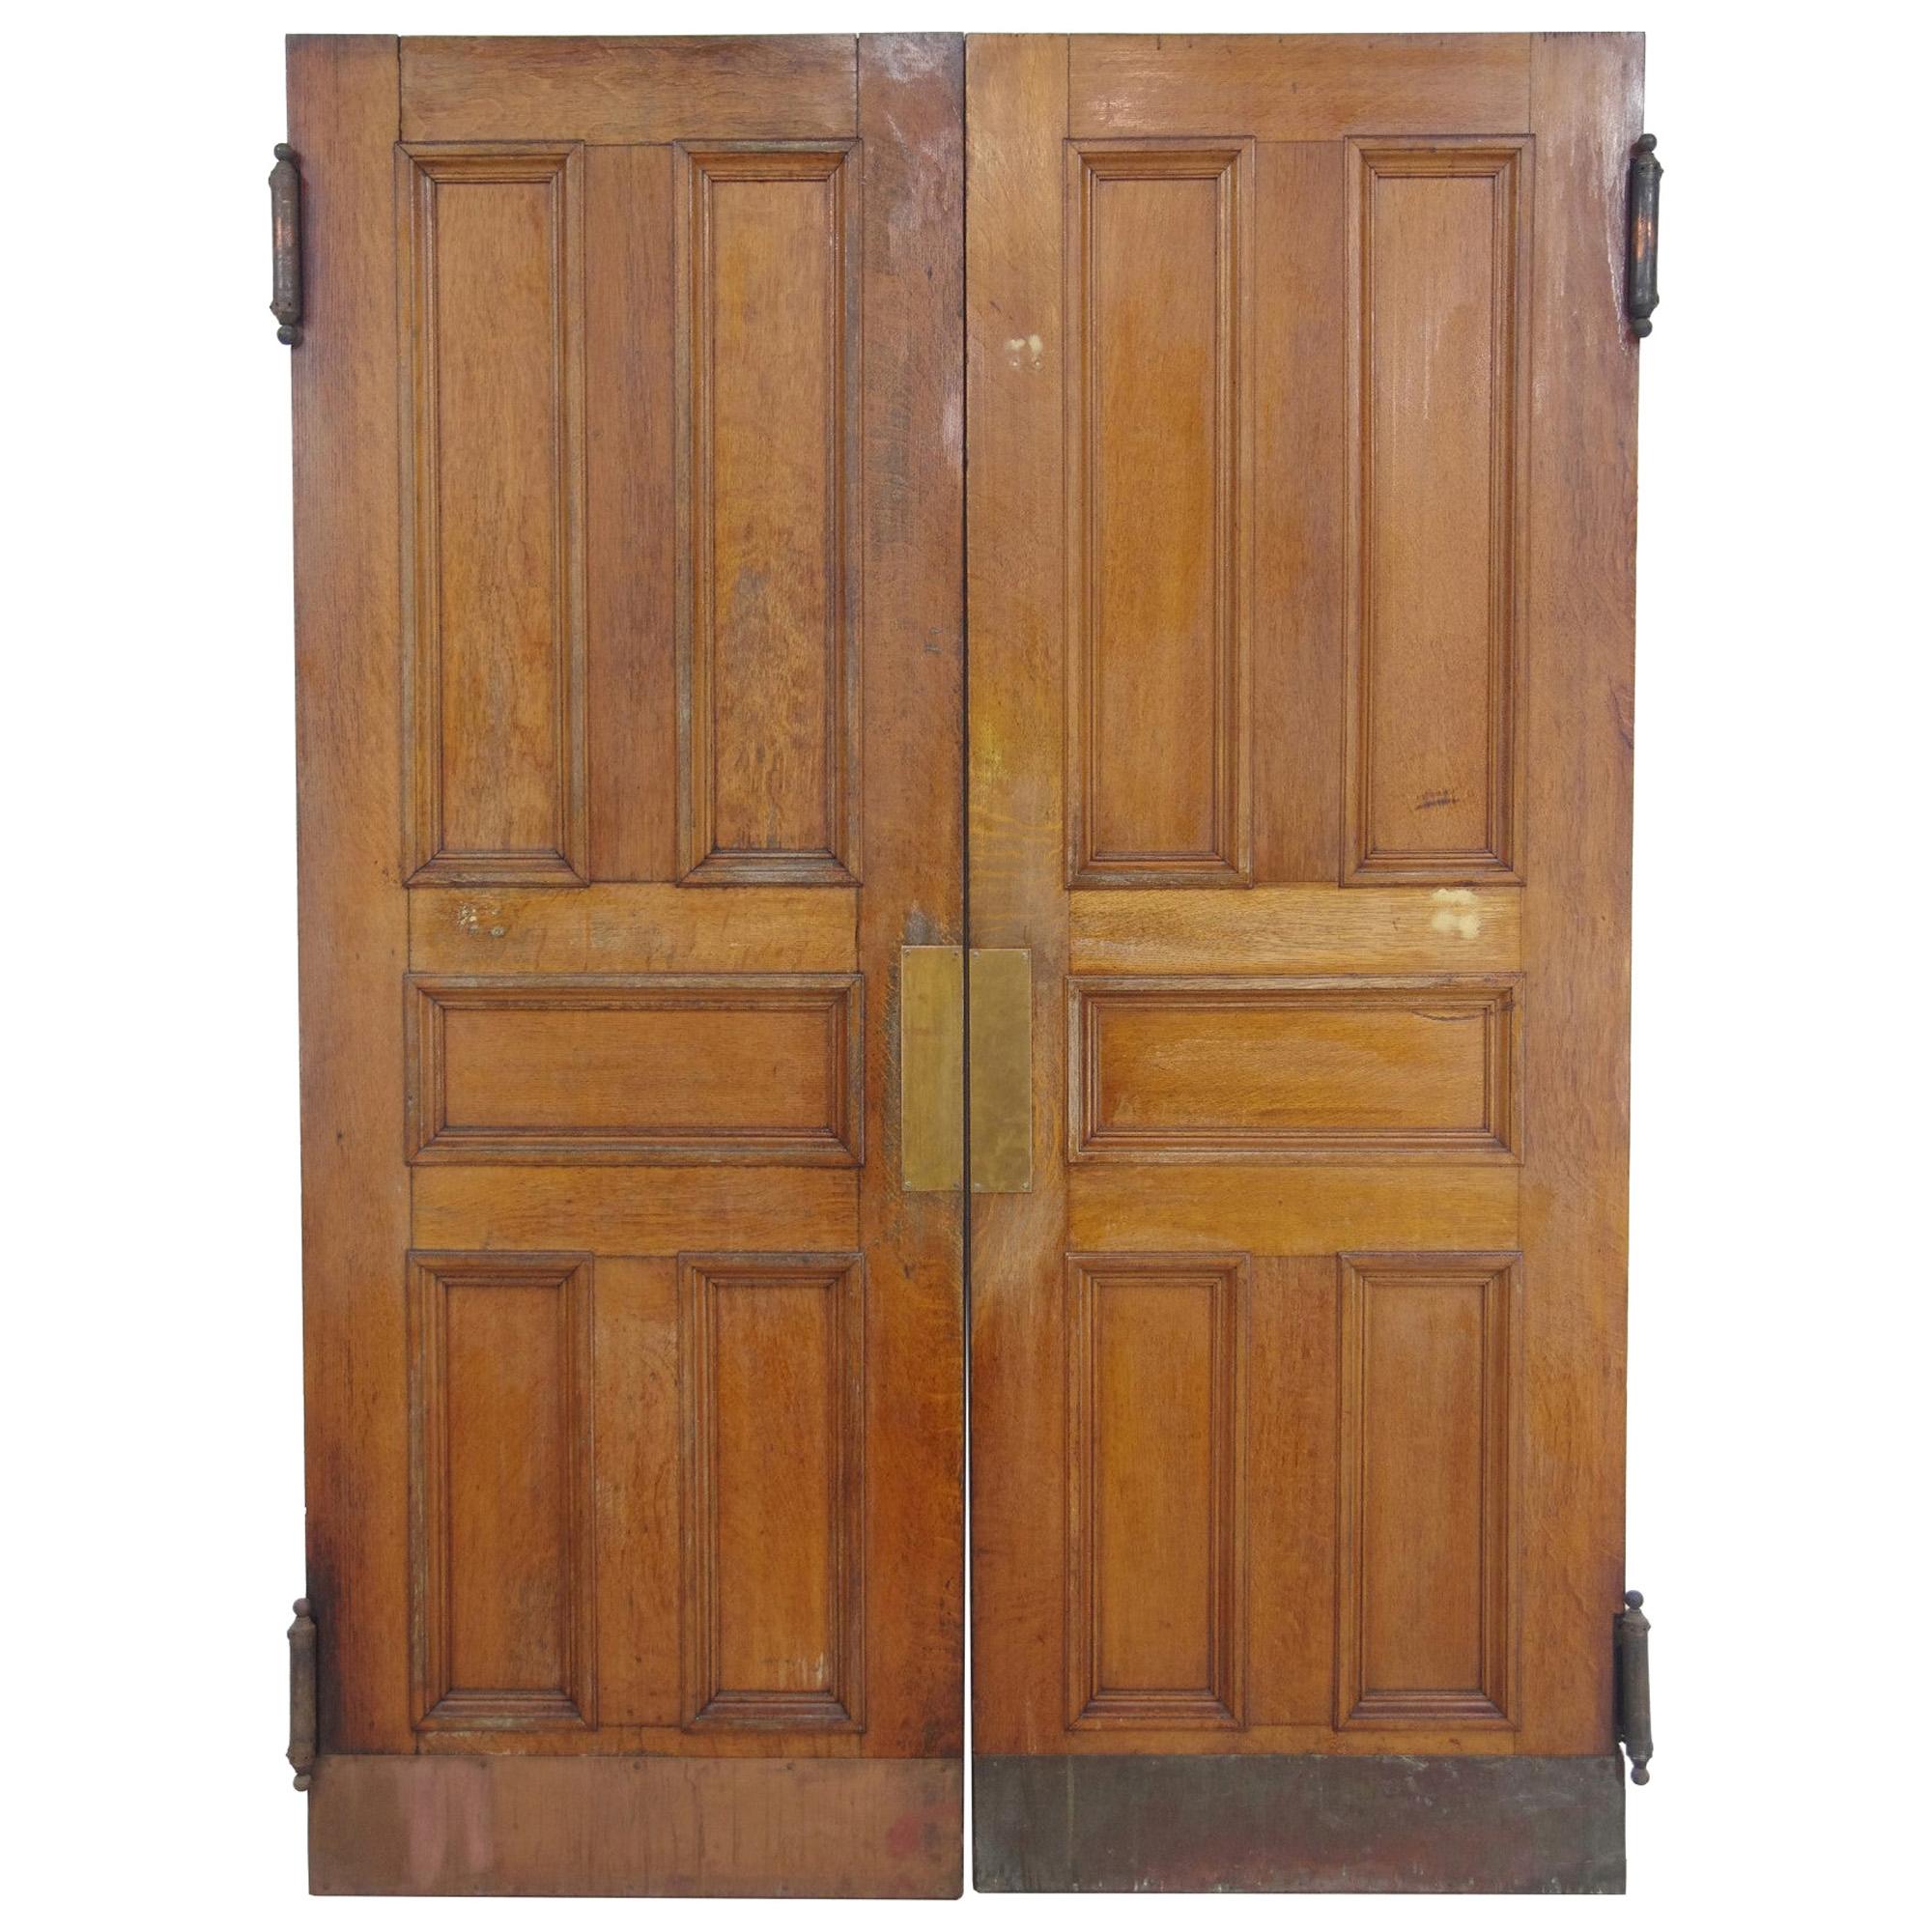 Antique Quarter Sawn Oak Swinging Double Doors with 5 Panes